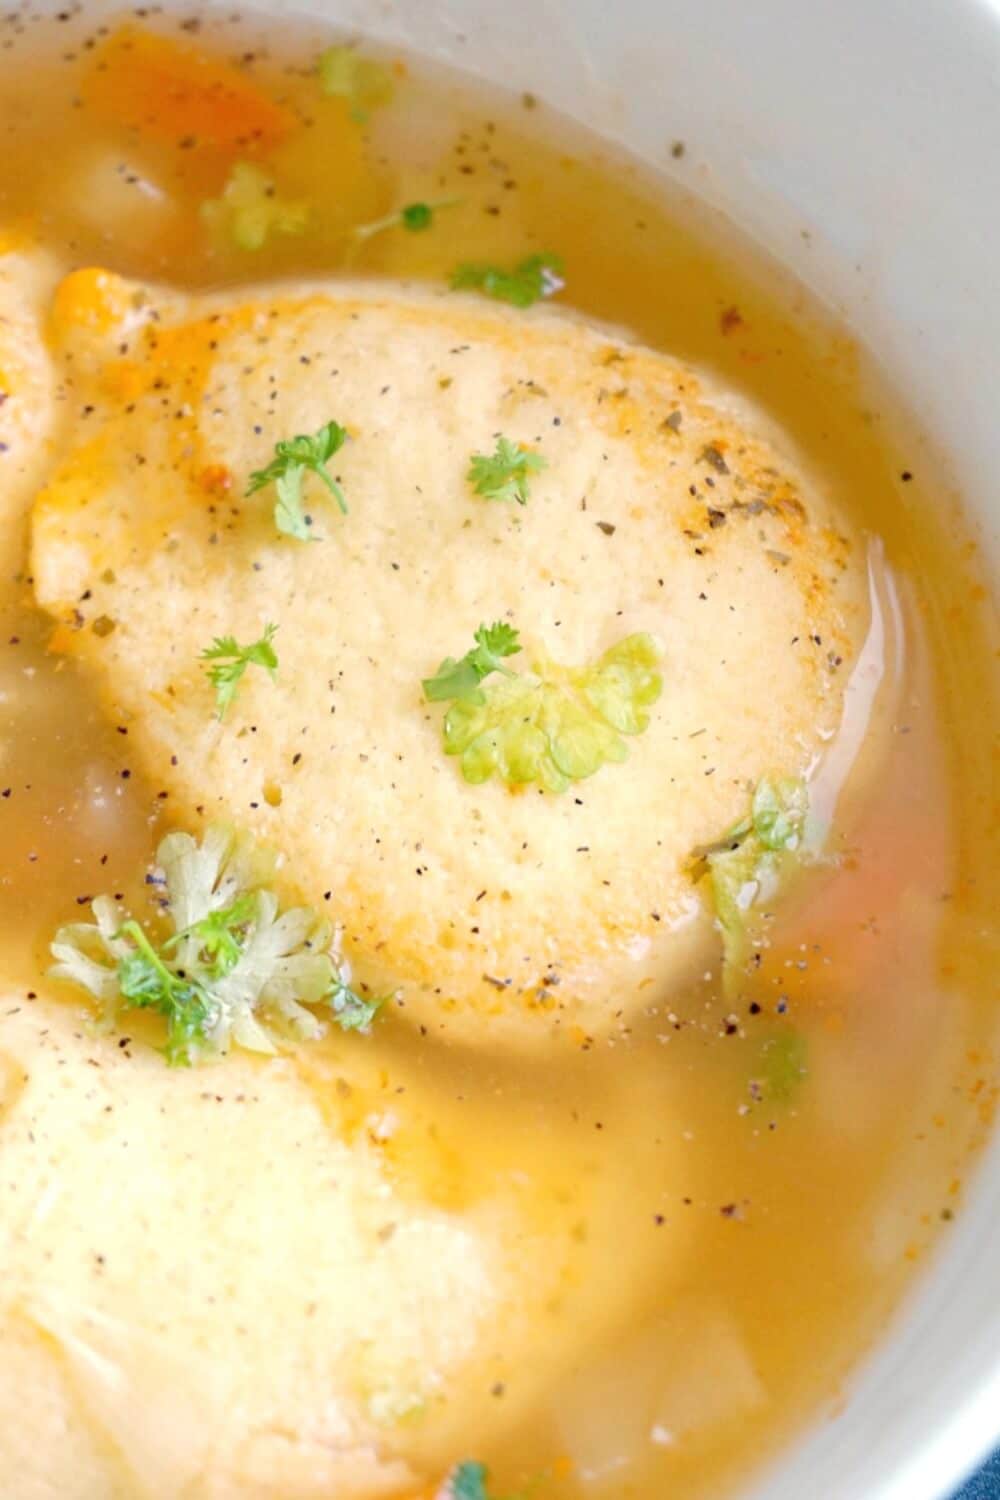 Close-up shoot of 2 semolina dumplings in a soup.